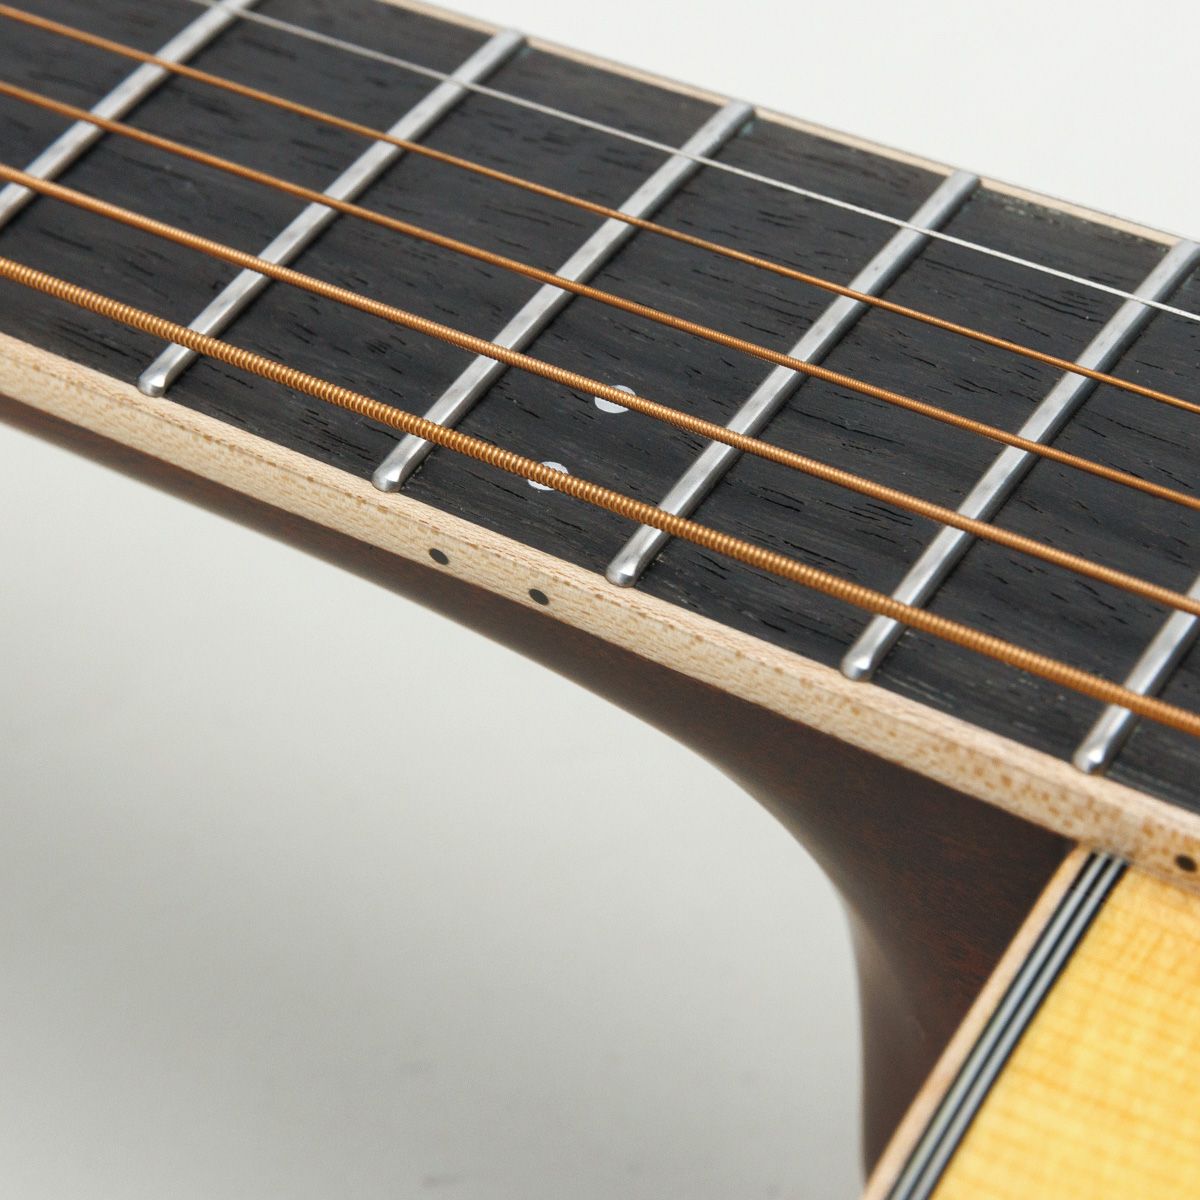 J-500L VNT ギター担当厳選 アコギ初心者セットエレアコ アジャスタブルサドル搭載 簡単弦高調整 ドレッドノート 関連画像